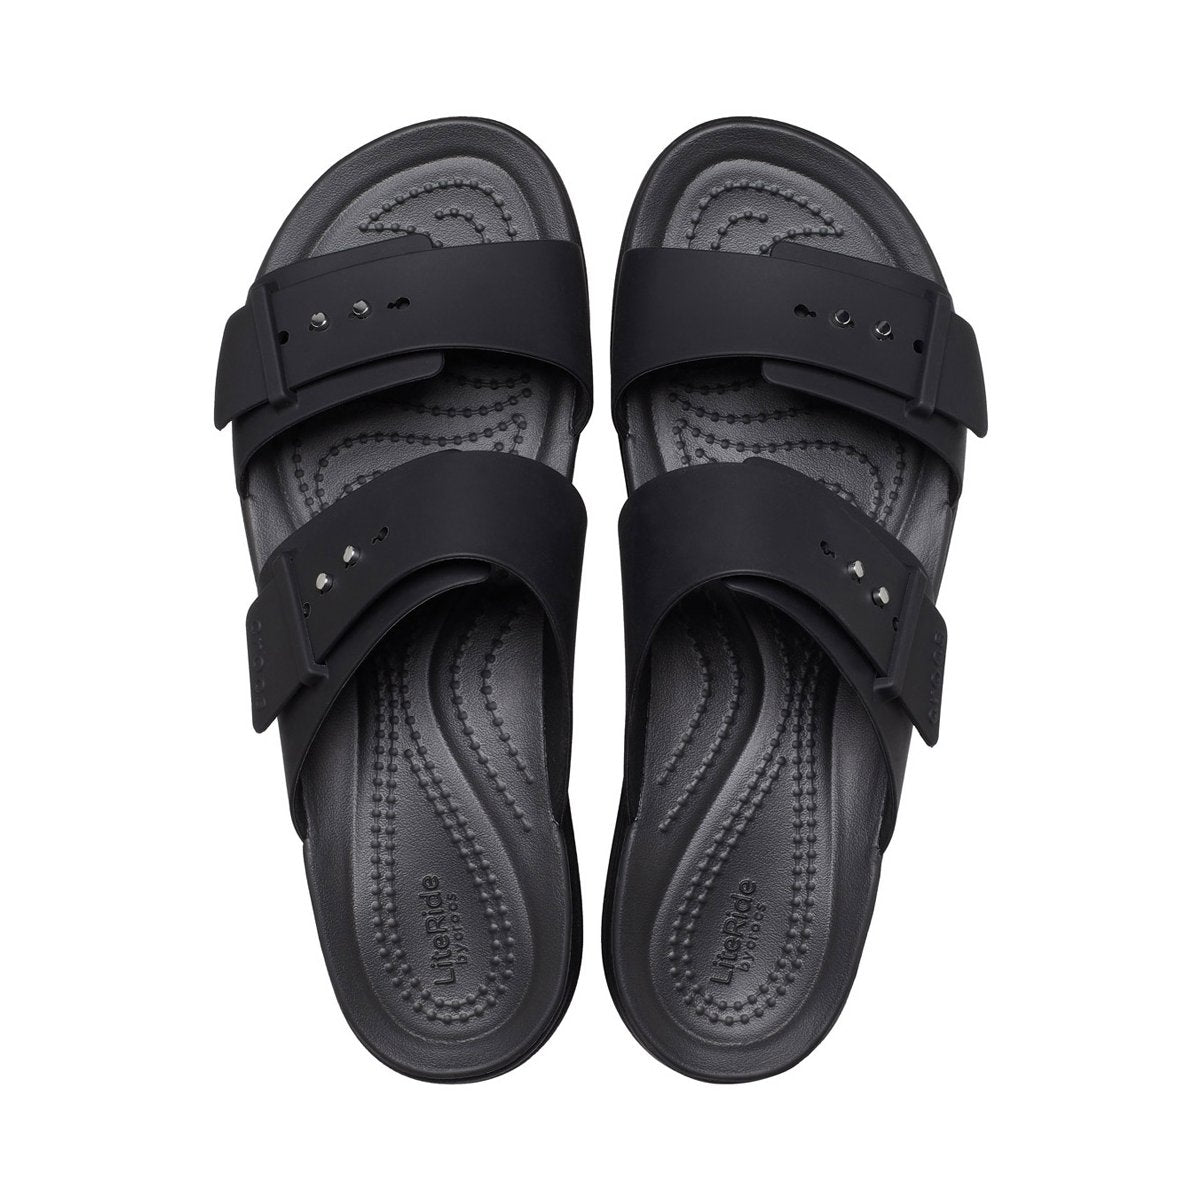 Crocs sandalo da donna con zeppa Brooklyn Buckle Low Wedge W 207431-001 nero